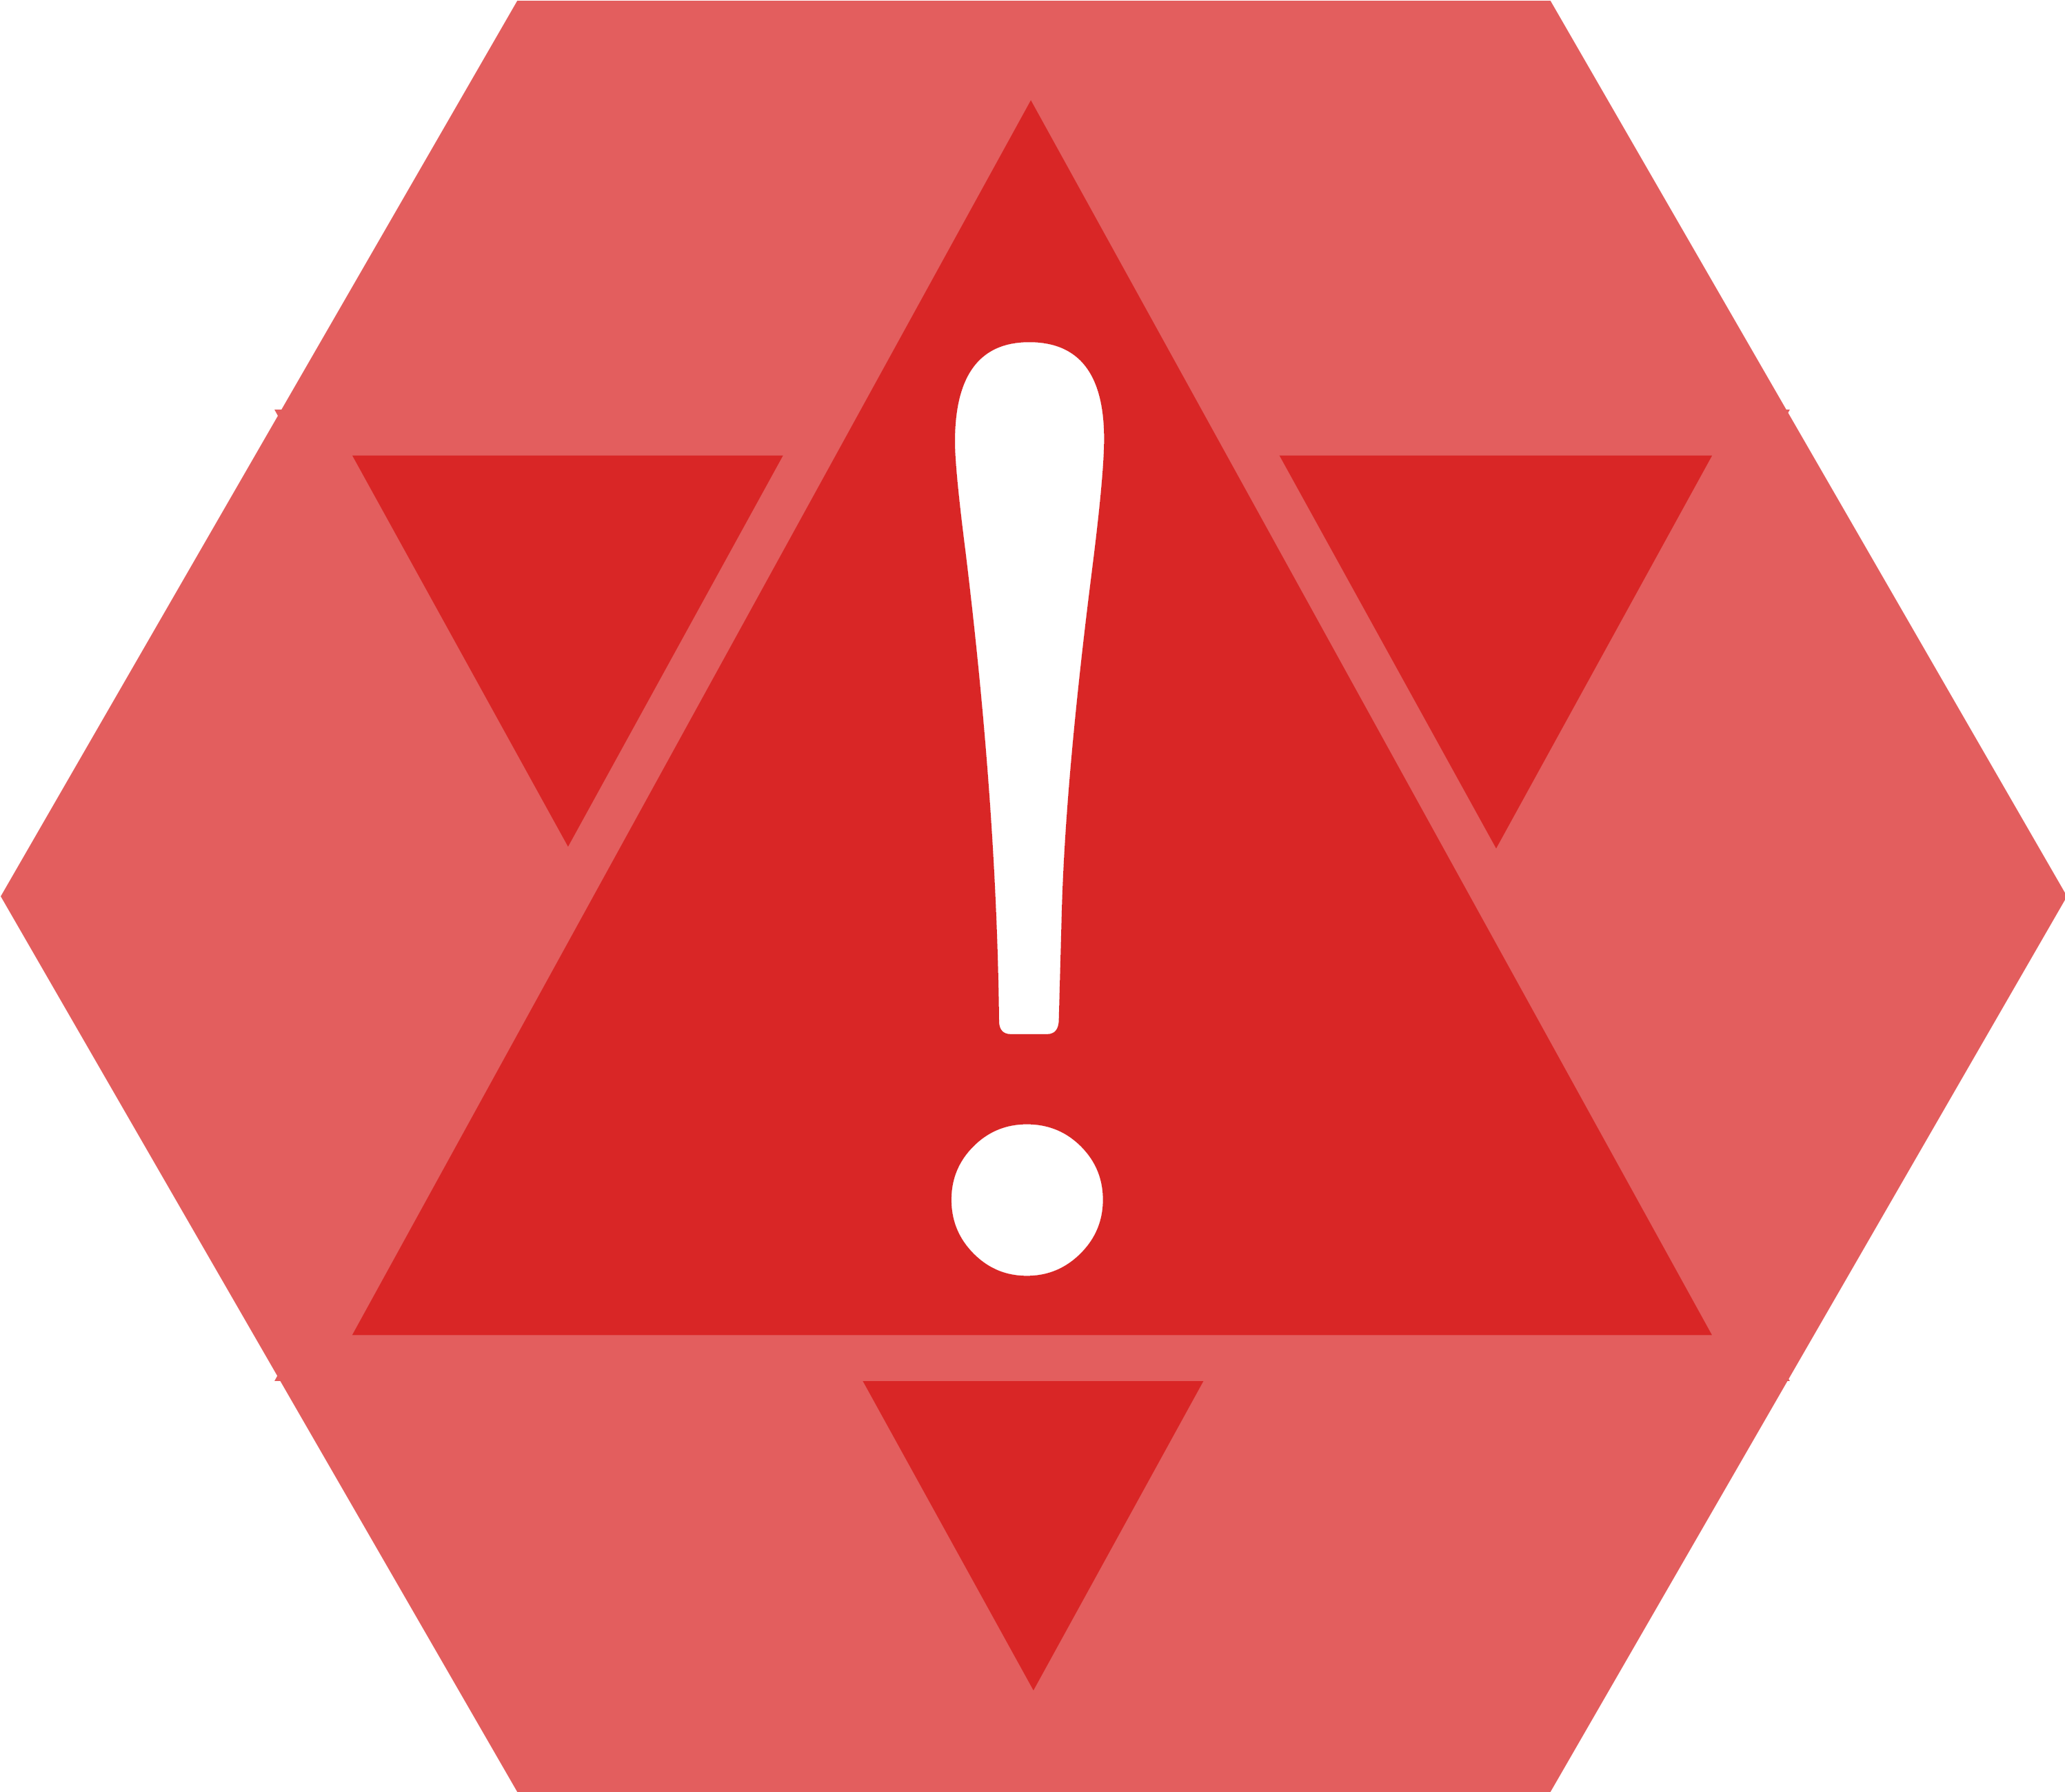 Unhappy Lexigram Heat 001 Hud Warning - Sign (3000x3000)